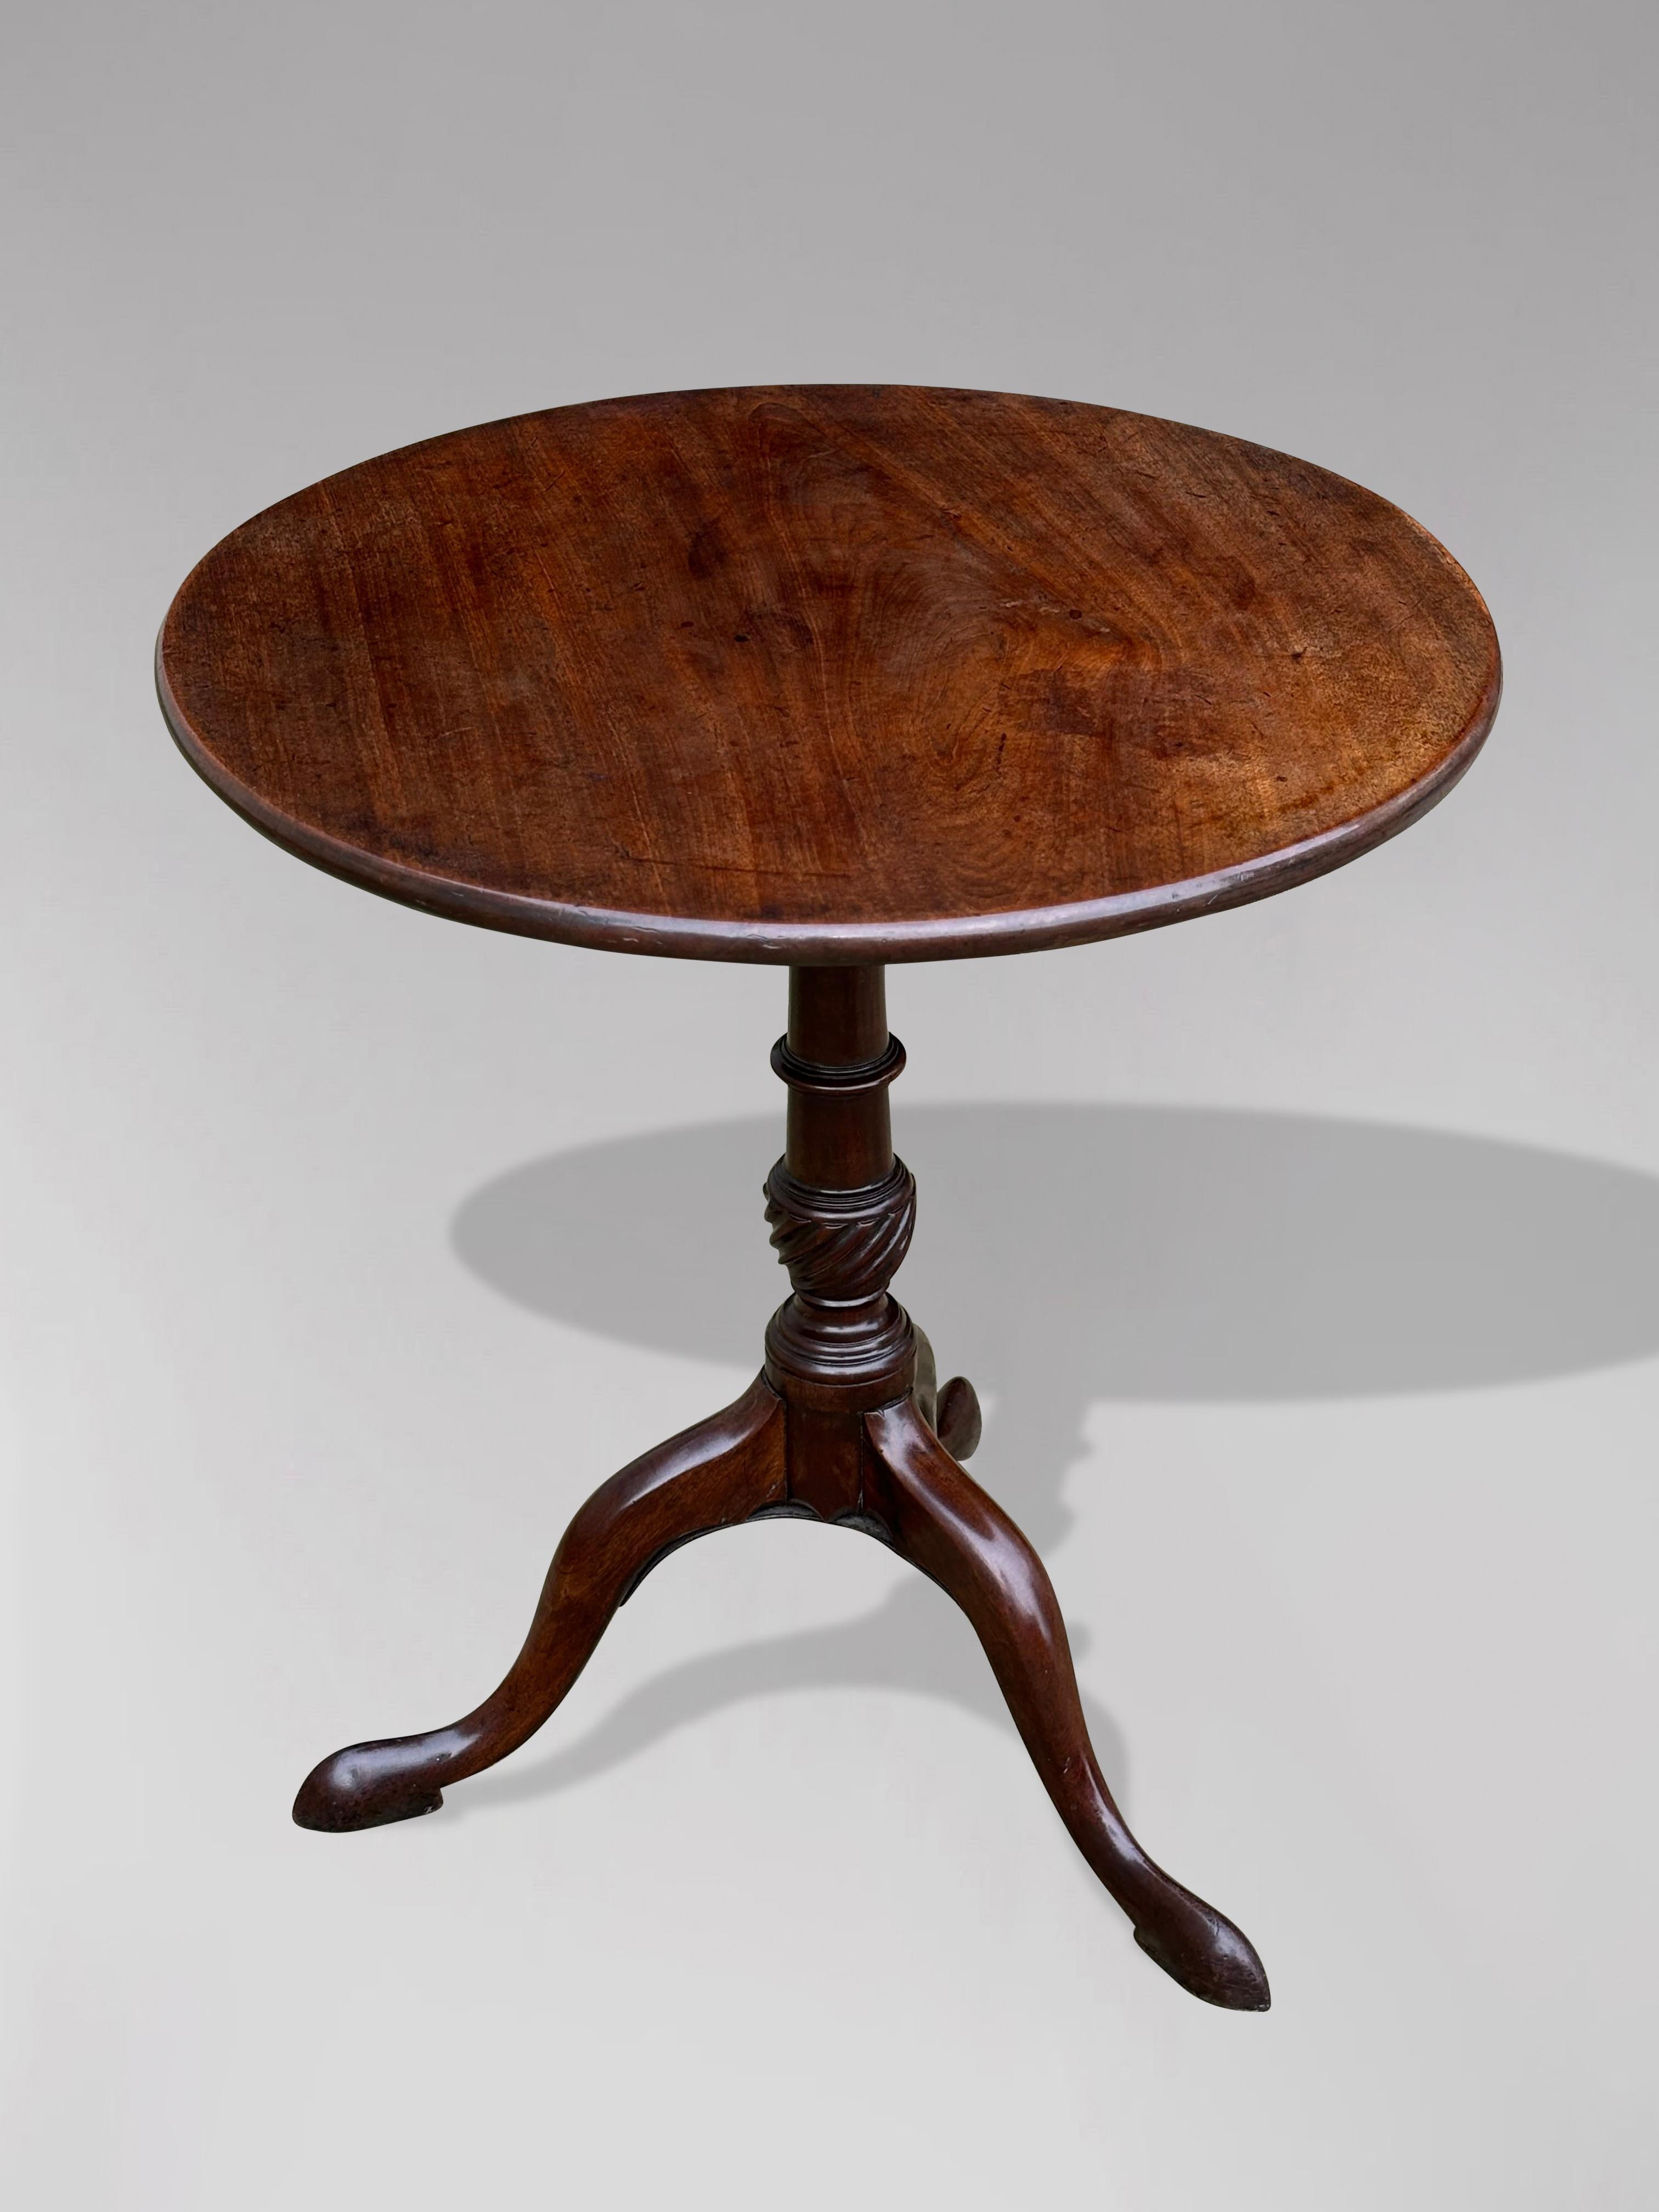 British 18th Century George III Period Mahogany Tilt-Top Tripod Table For Sale